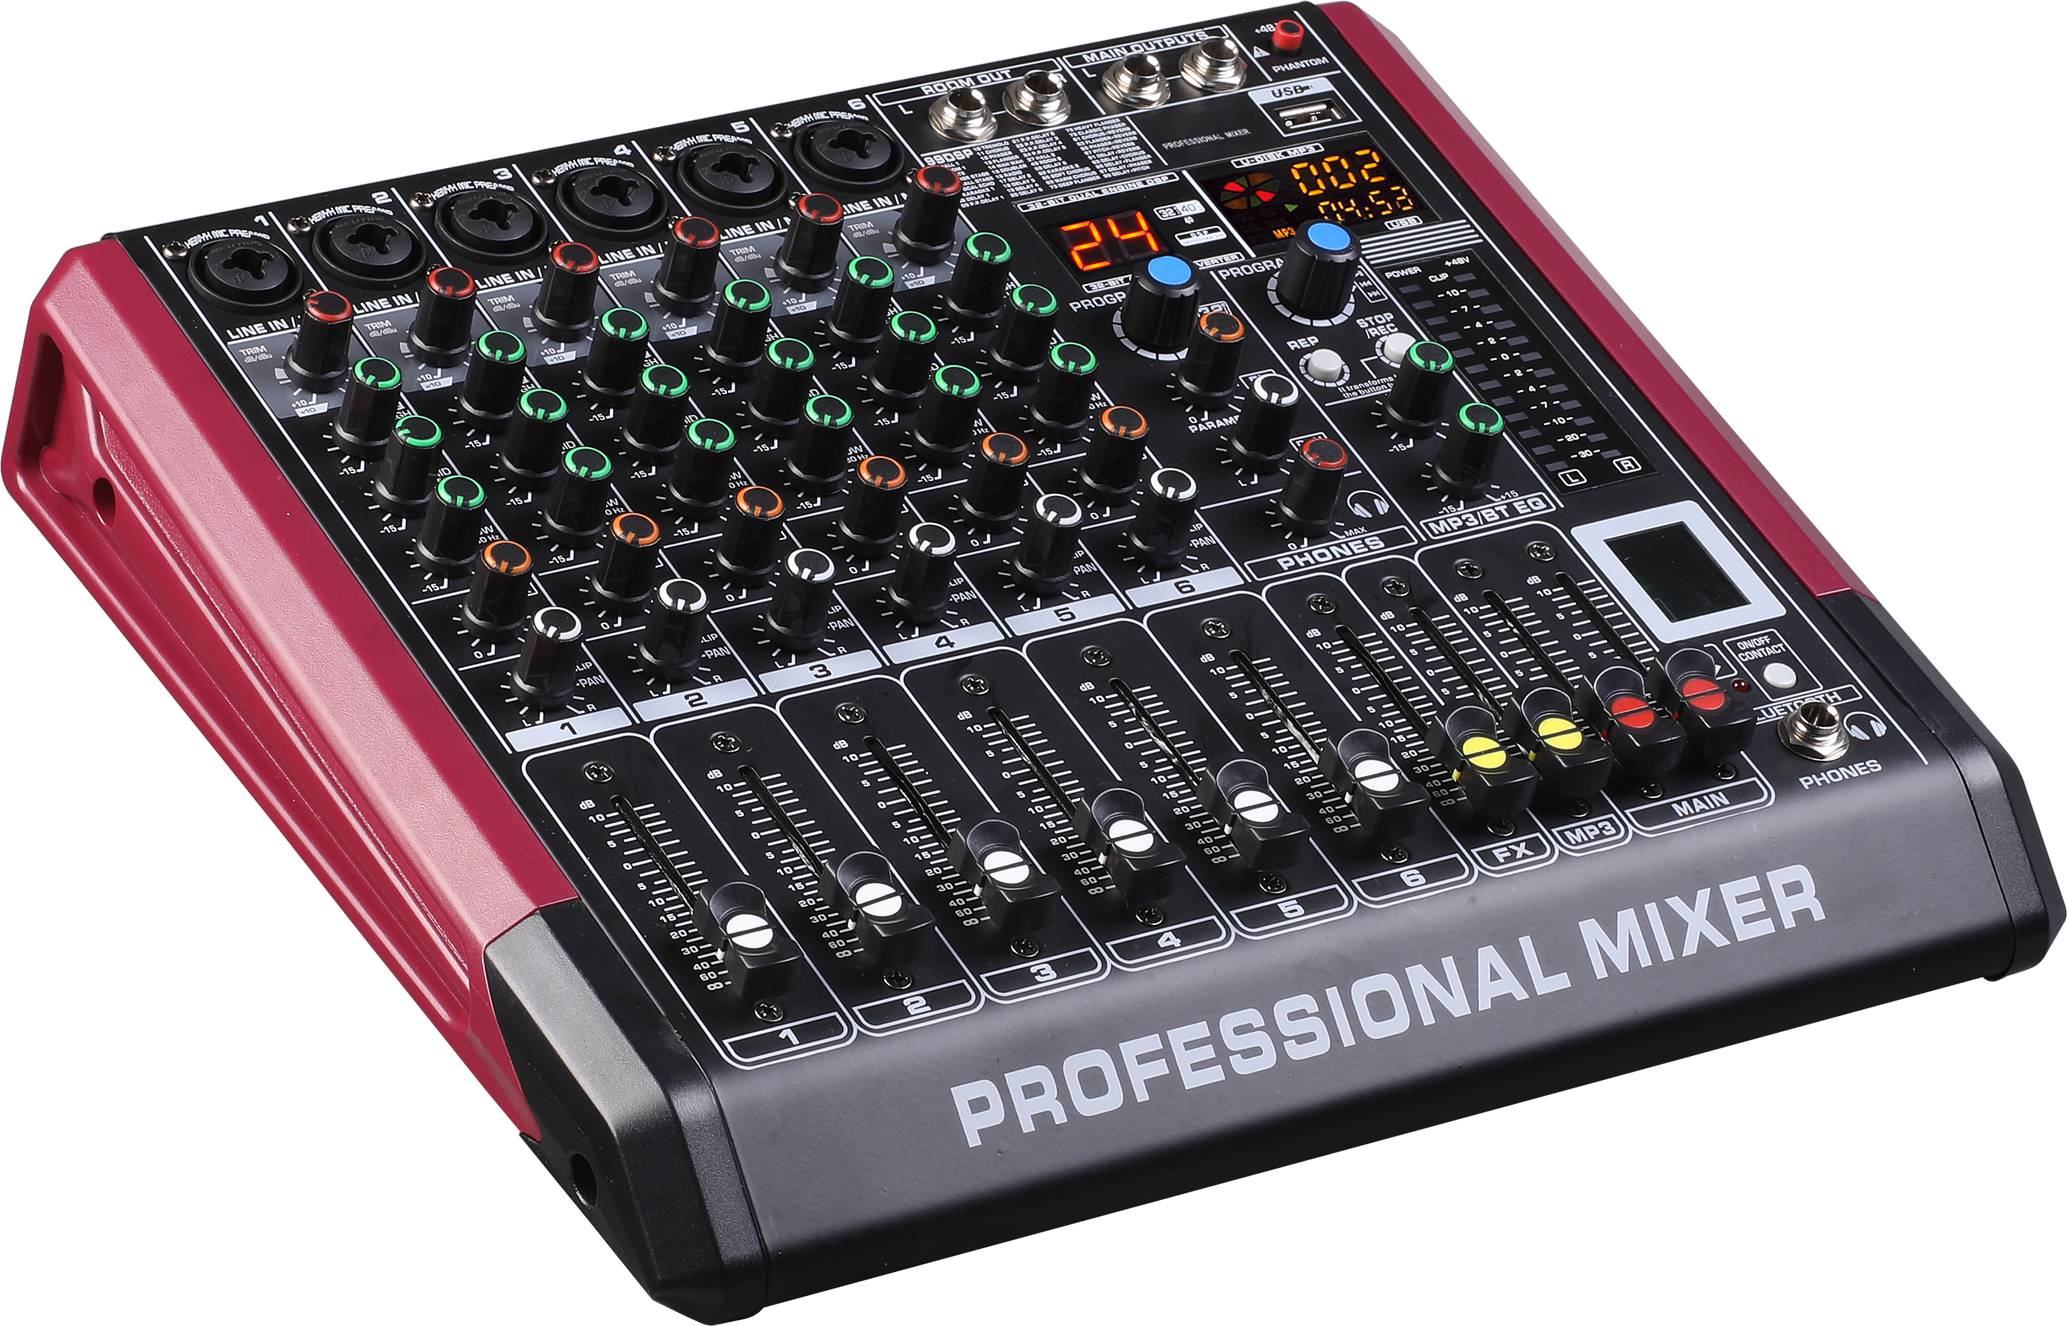 M-4N M-6N M-8N Professional Mixer Console